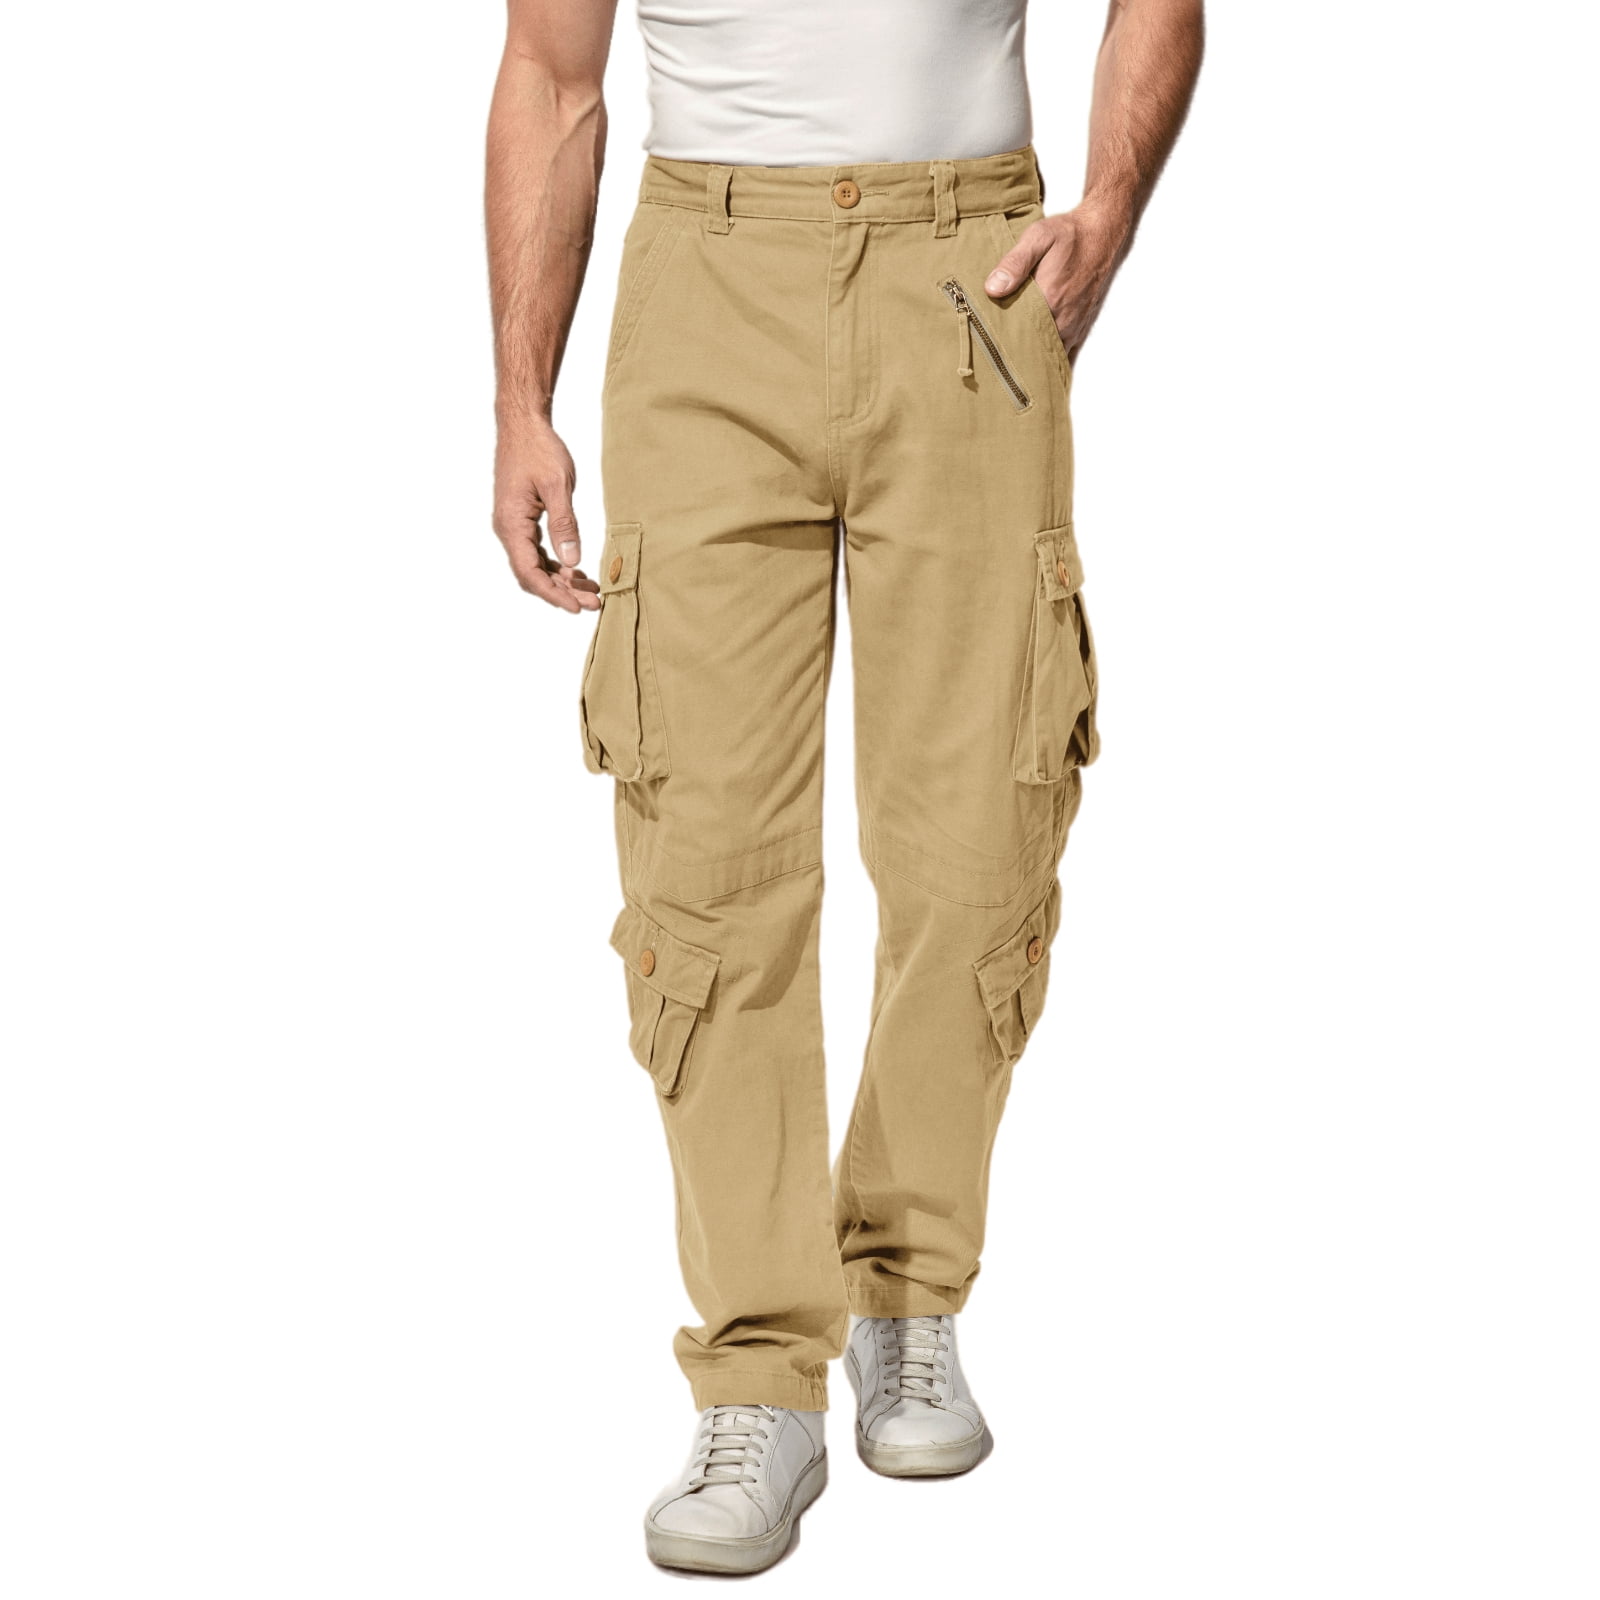 KOCTHOMY Men's Wild Cargo Pants, Military Camo Pants Cotton Casual Work ...